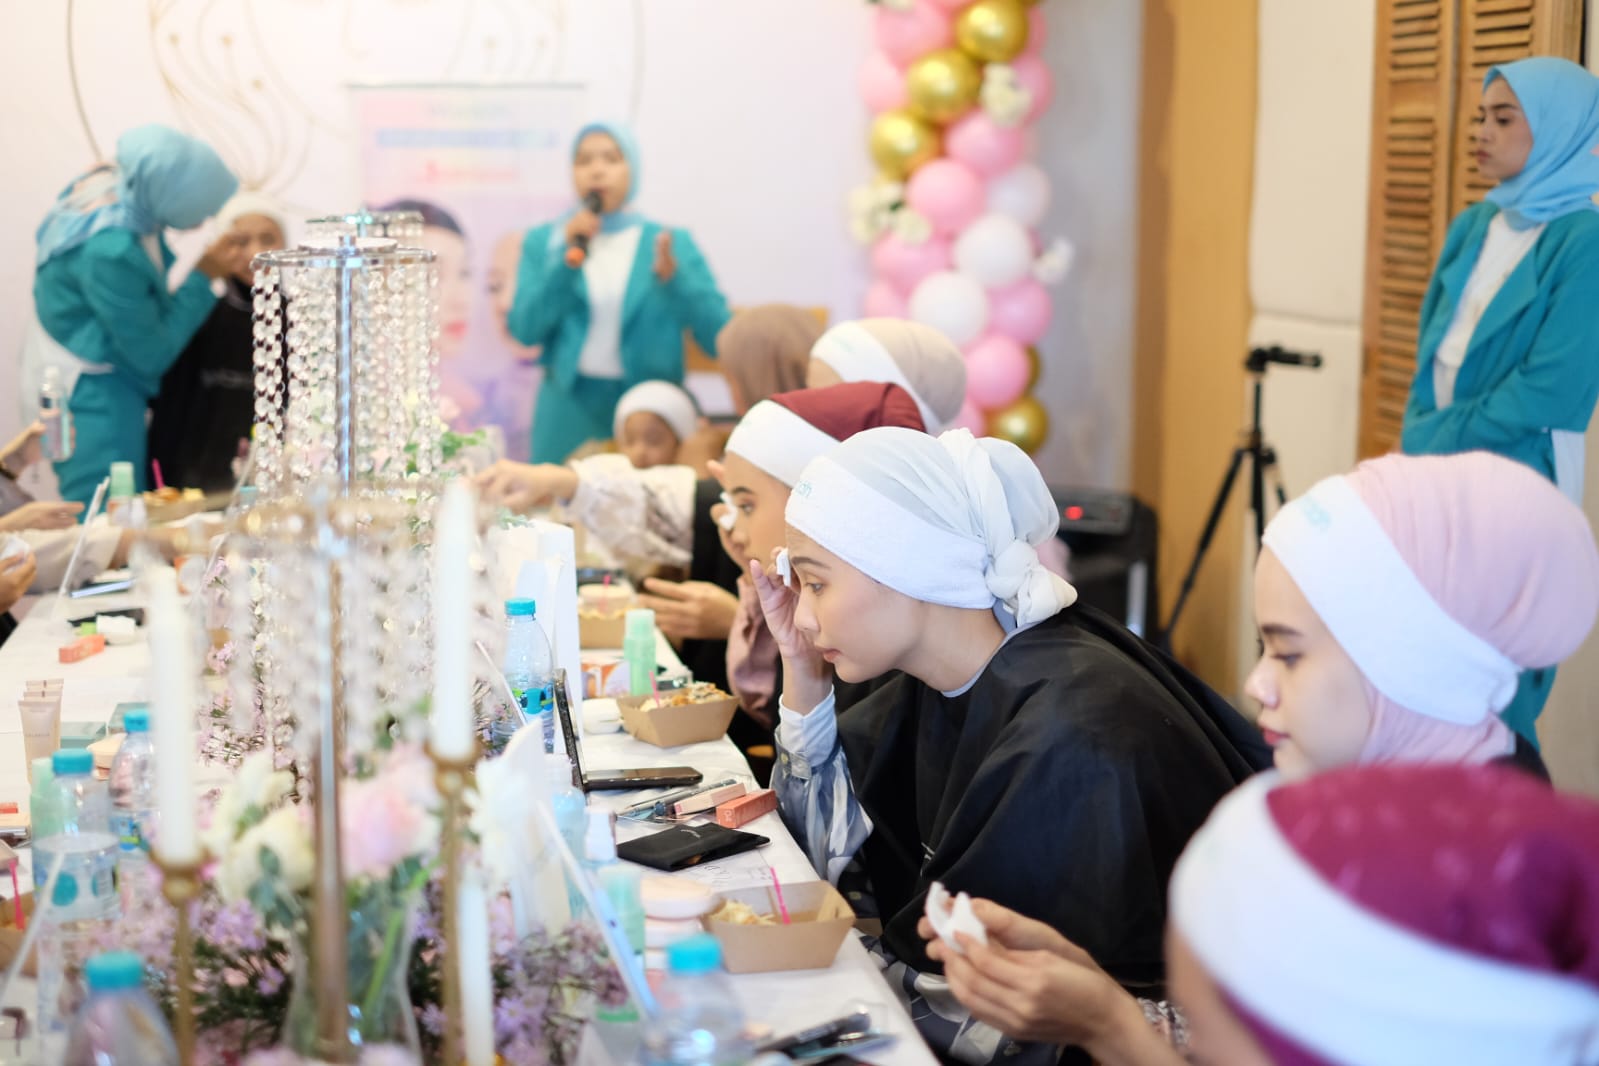 DS, brand modest wear menggelar make up class berkolaborasi dengan Karita Surabaya dan Wardah di Surabaya (Foto / Catur/ Metro TV) 